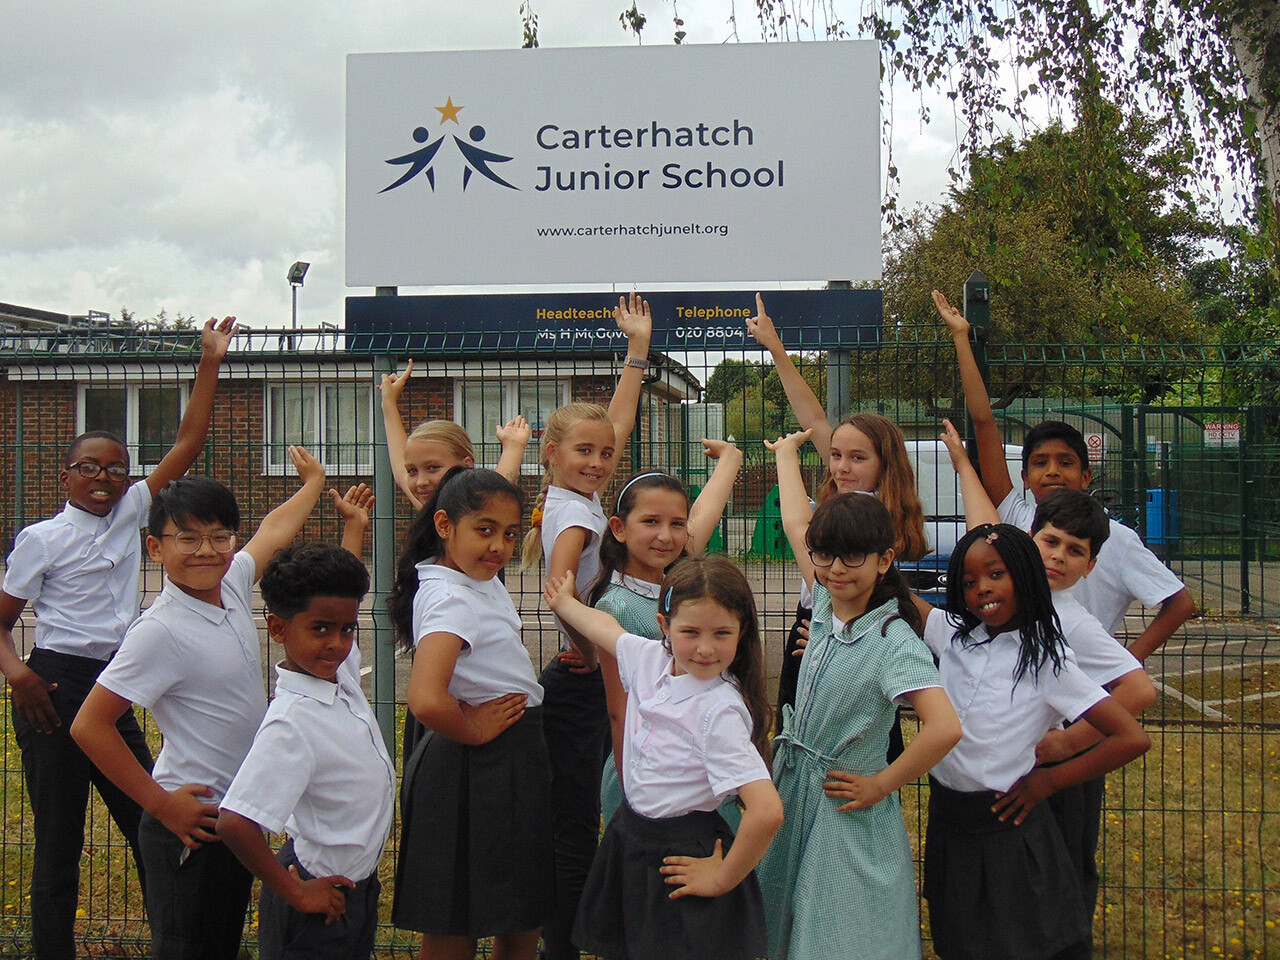 Carterhatch Junior School - exterior signage